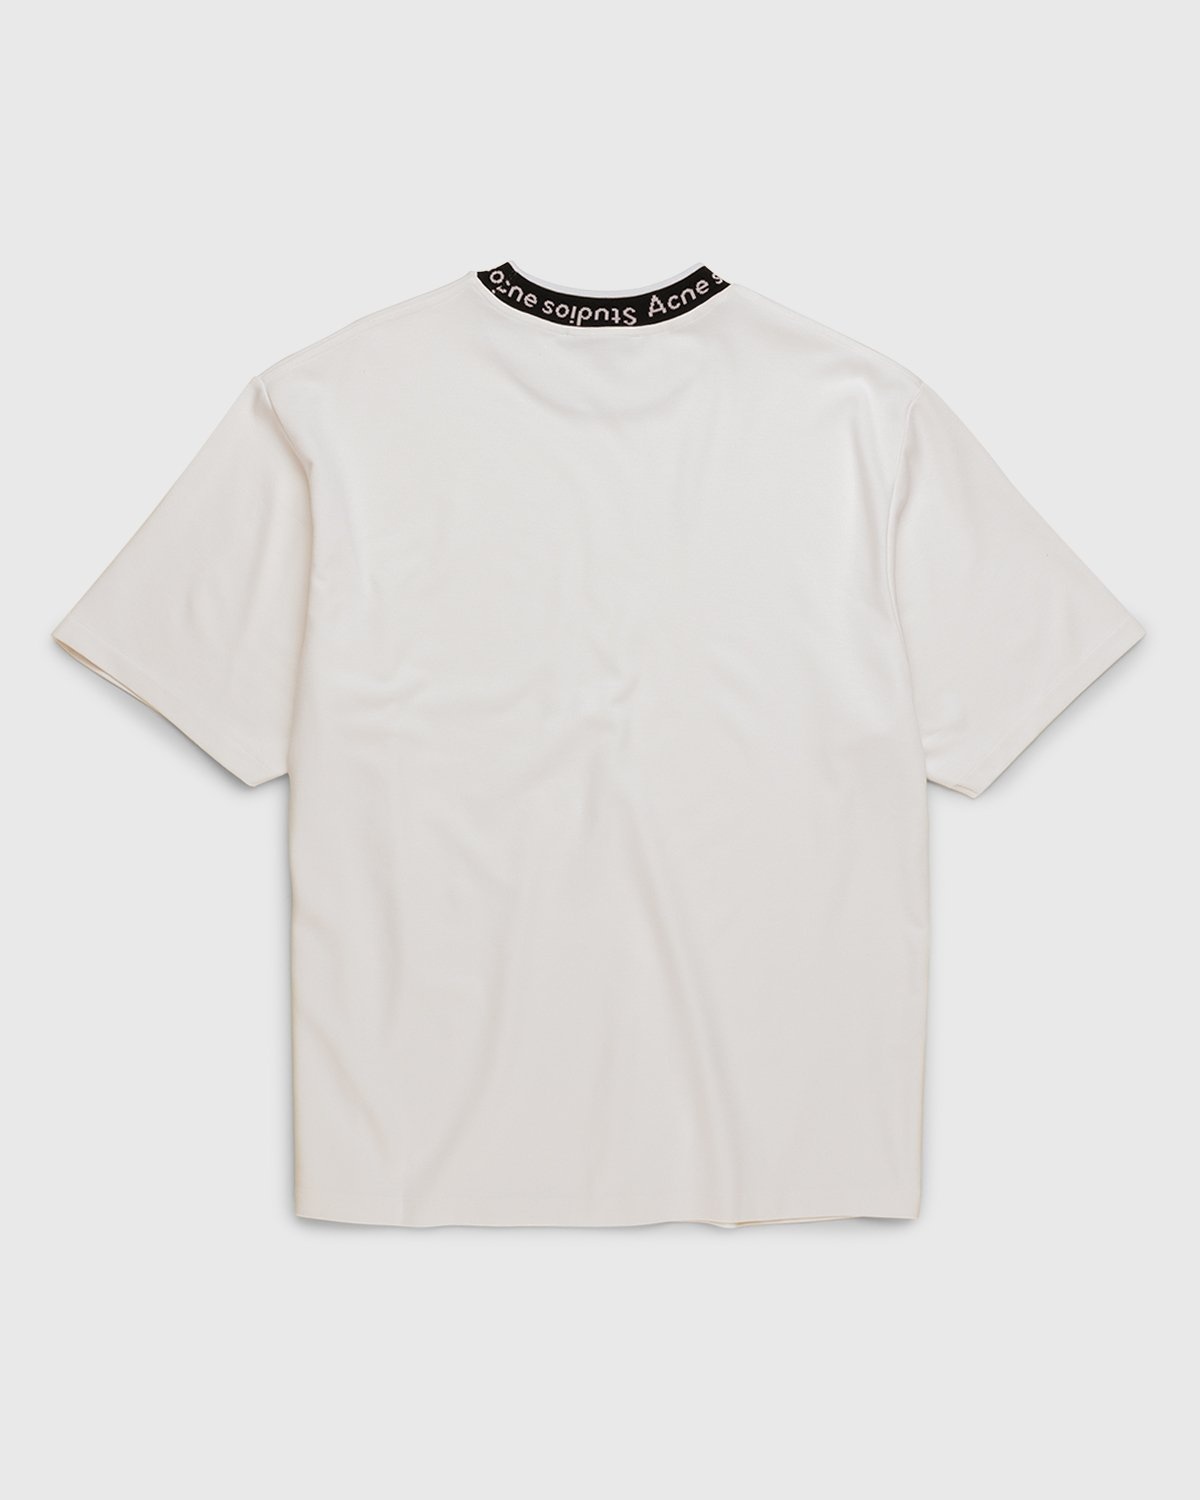 Acne Studios – Logo T-Shirt White - T-shirts - White - Image 2